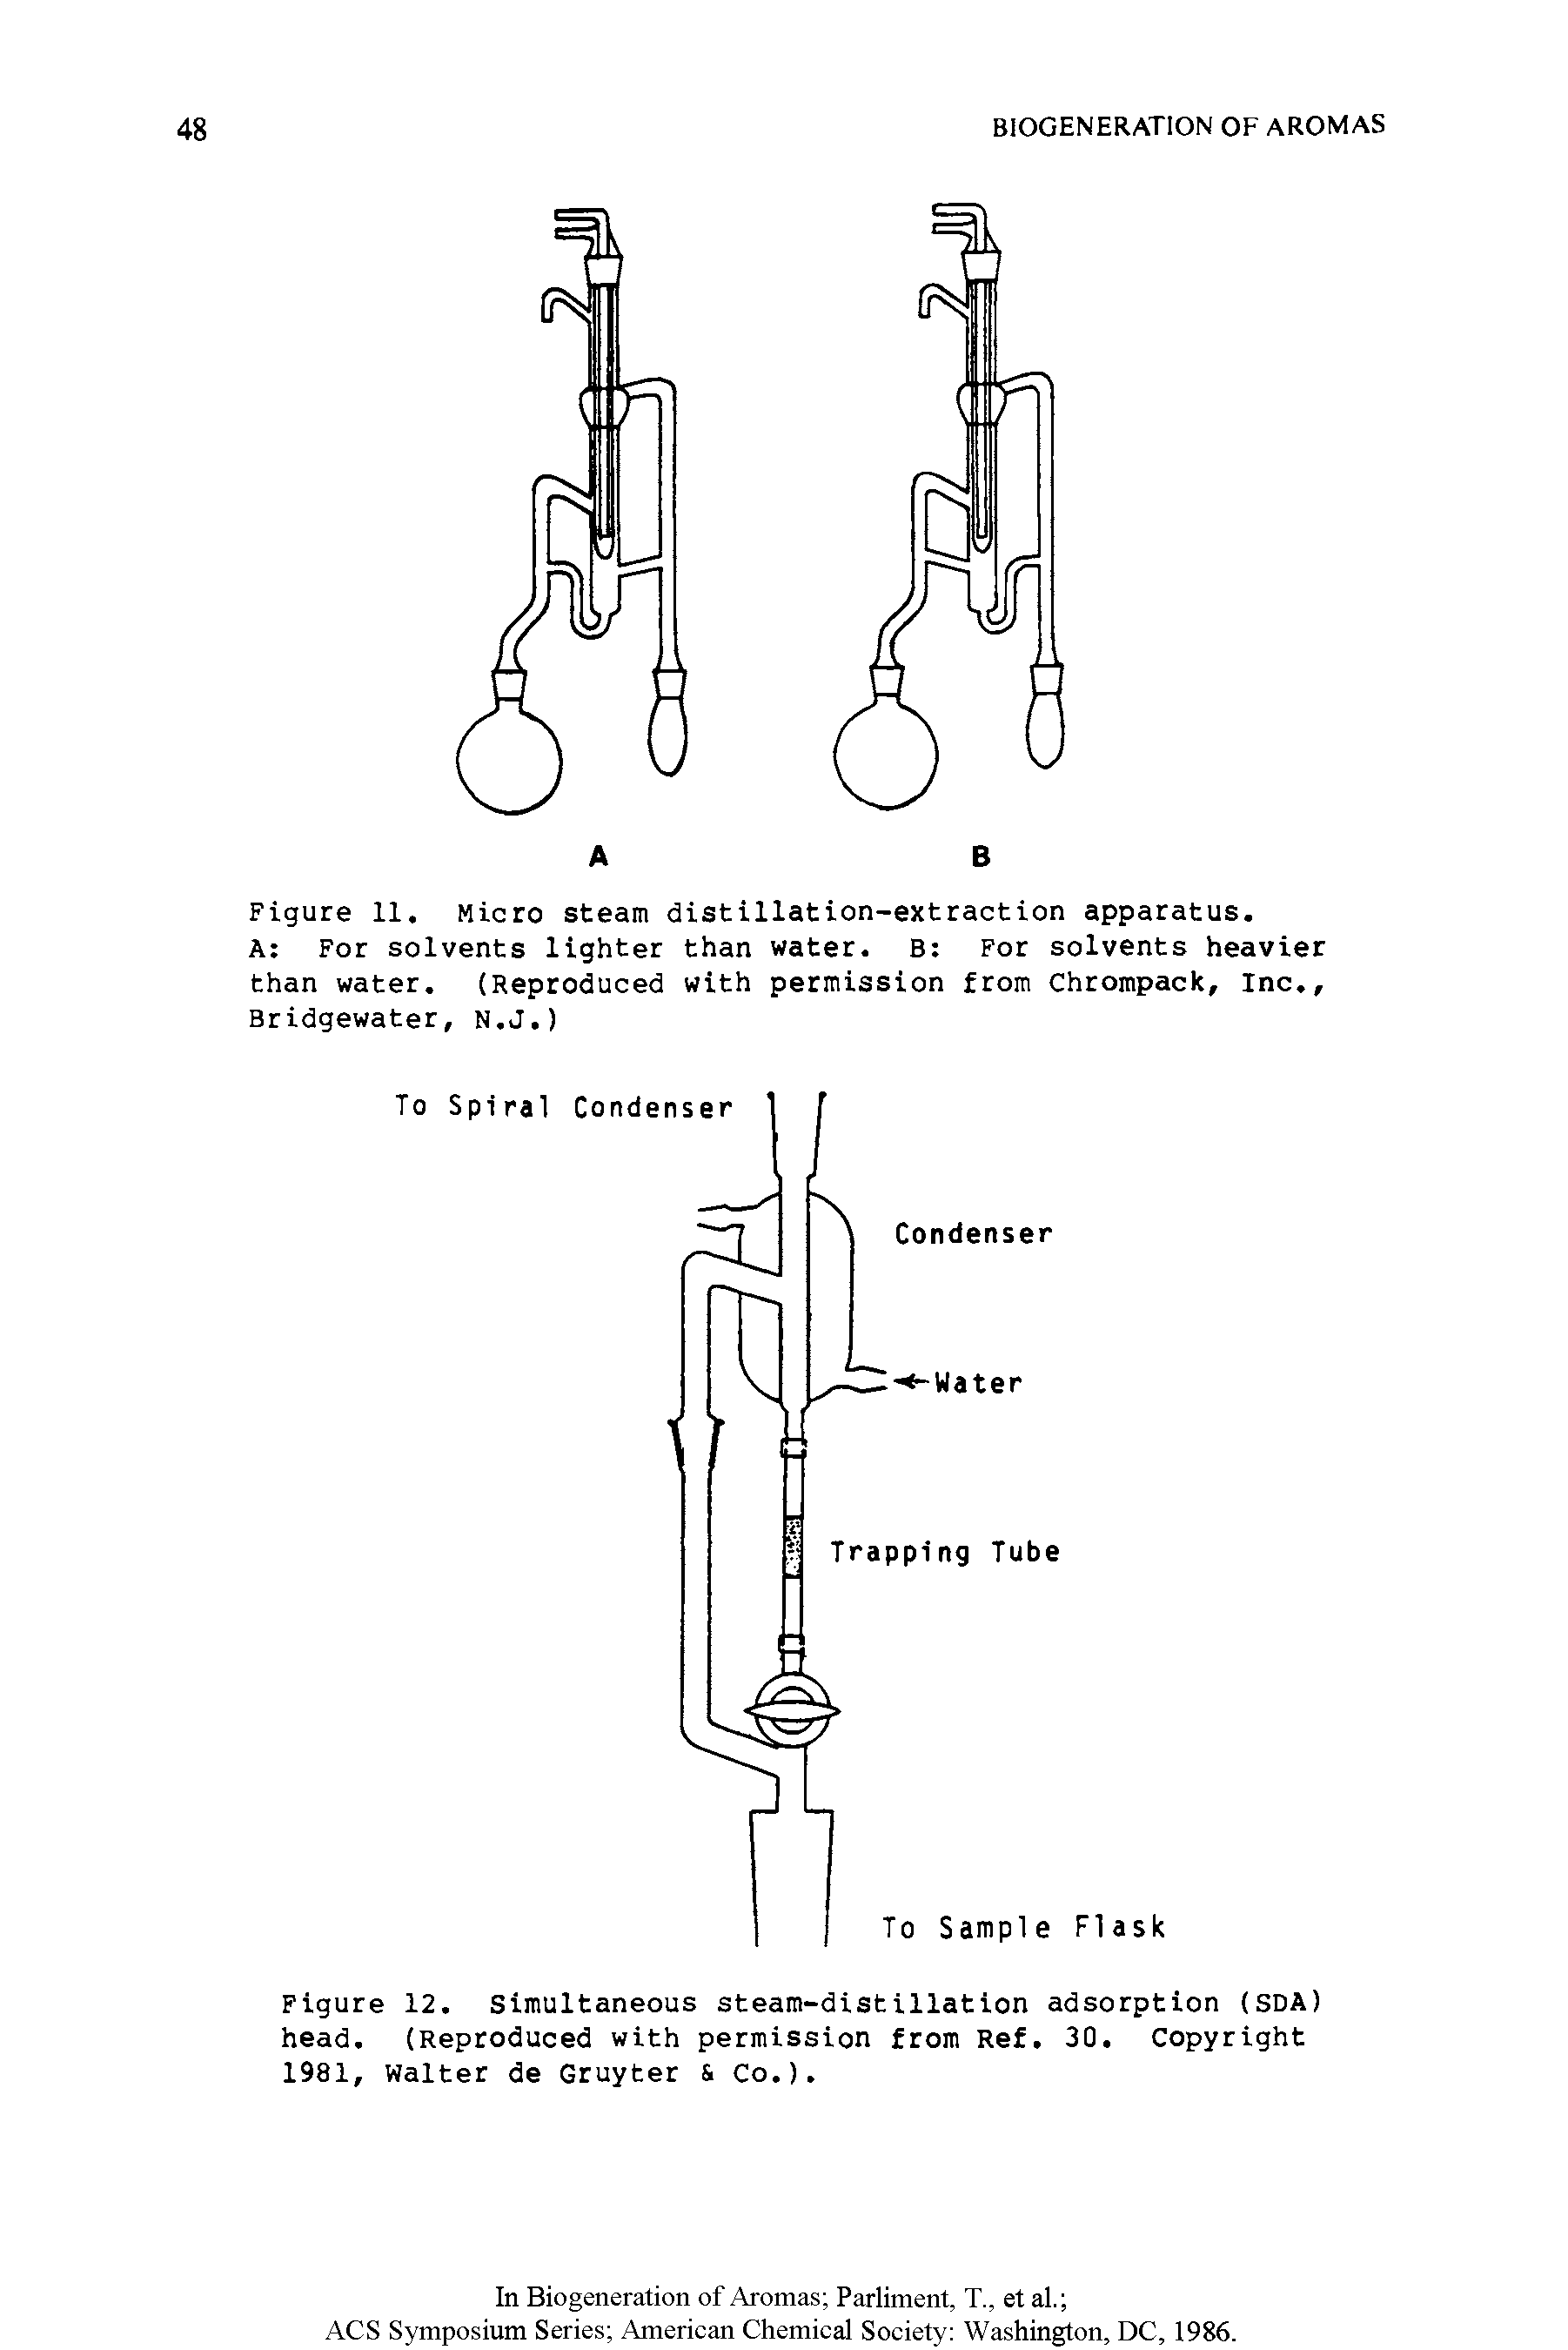 Figure 11. Micro steam distillation-extraction apparatus.